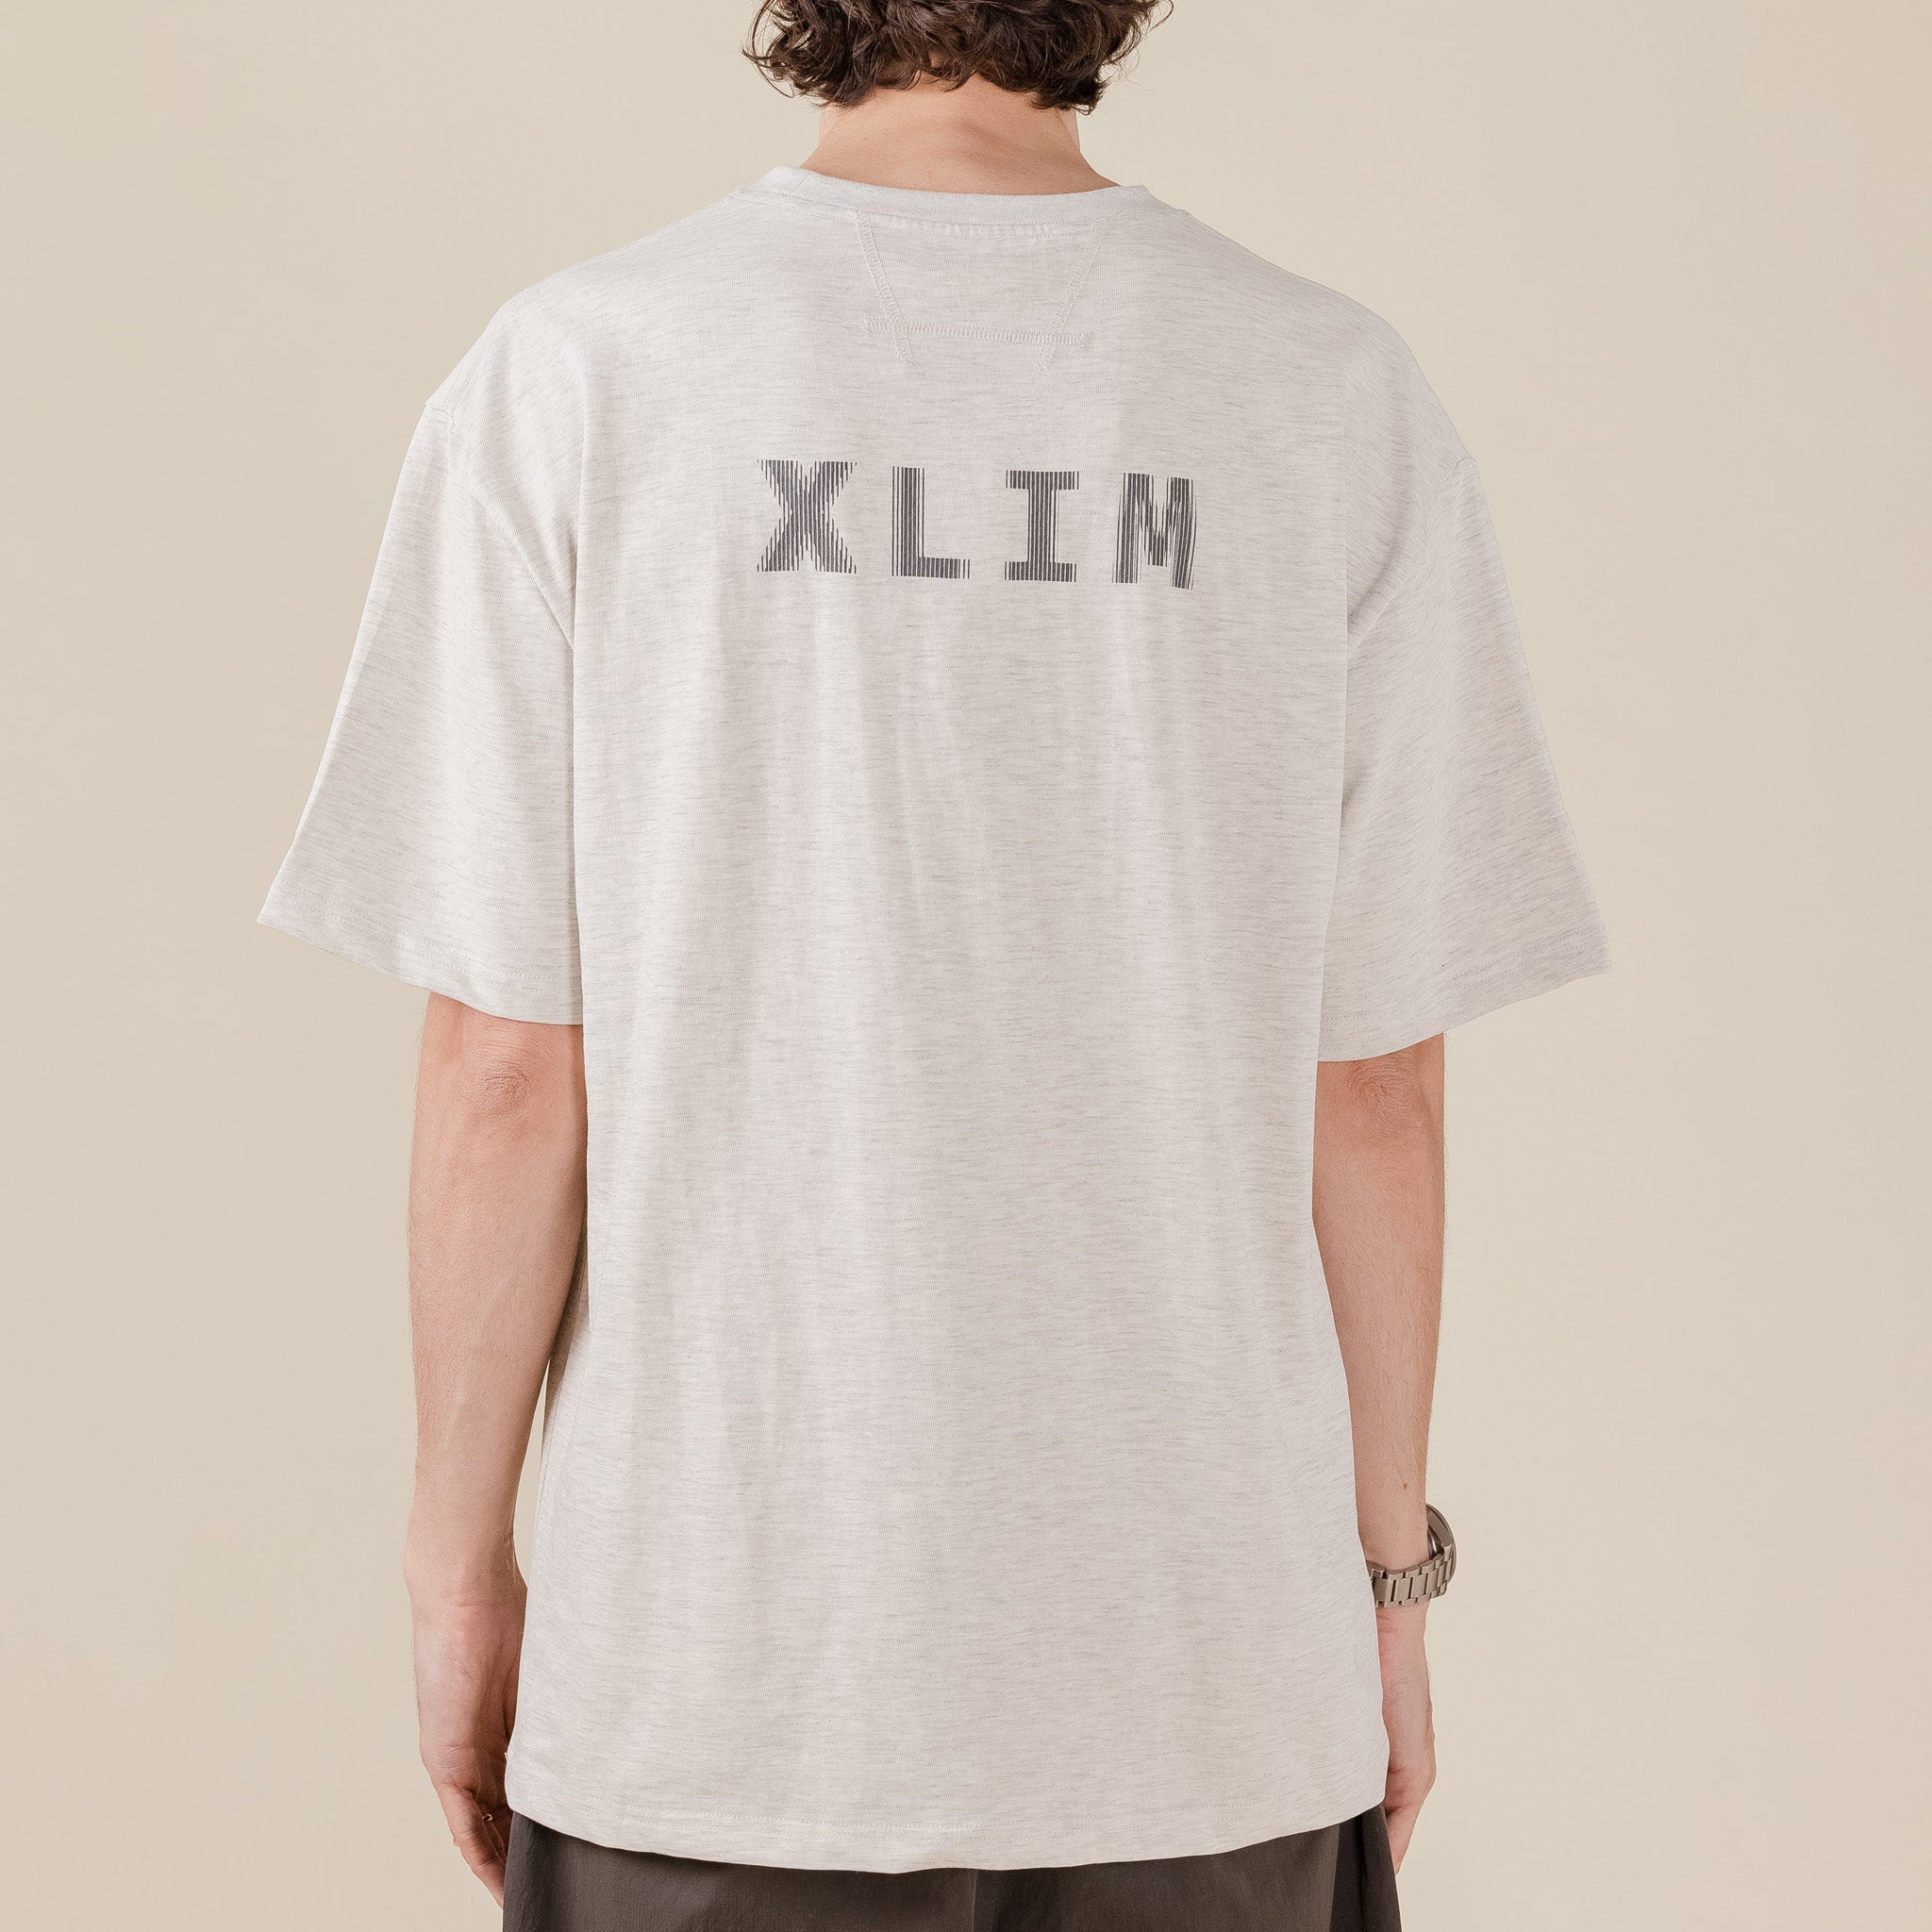 XLIM - EP.3 02 T-Shirt - Melange Grey | T.T.O.O